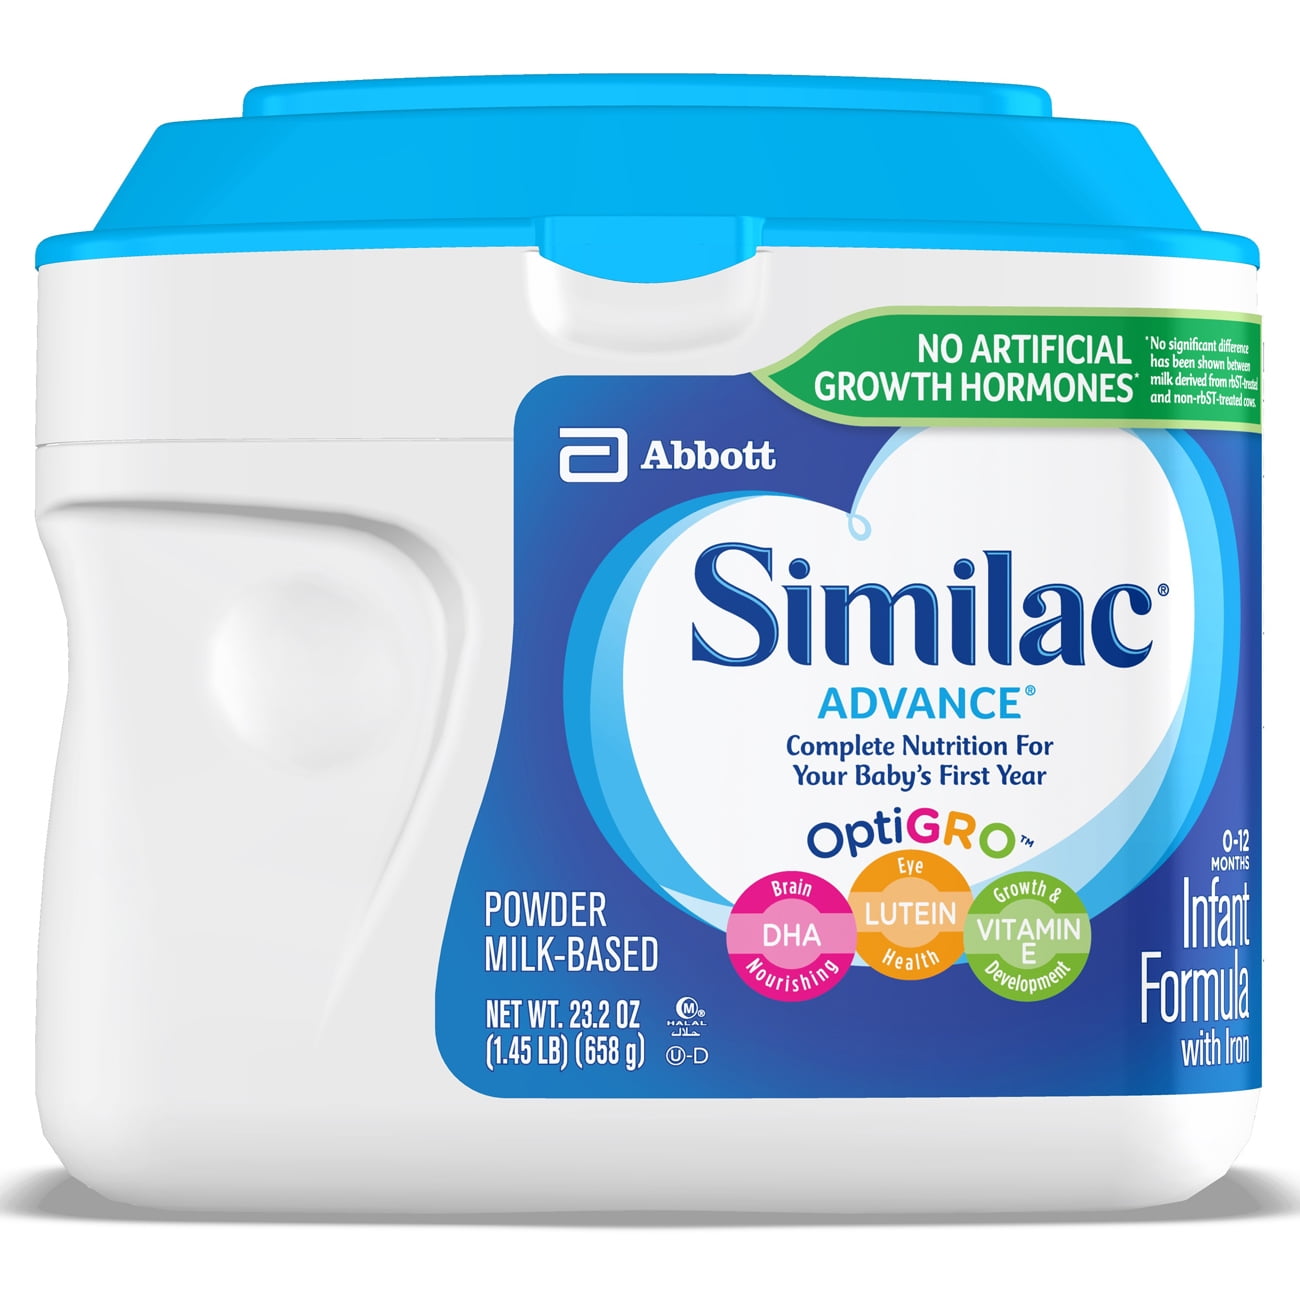 Similac Advance Infant Formula with 